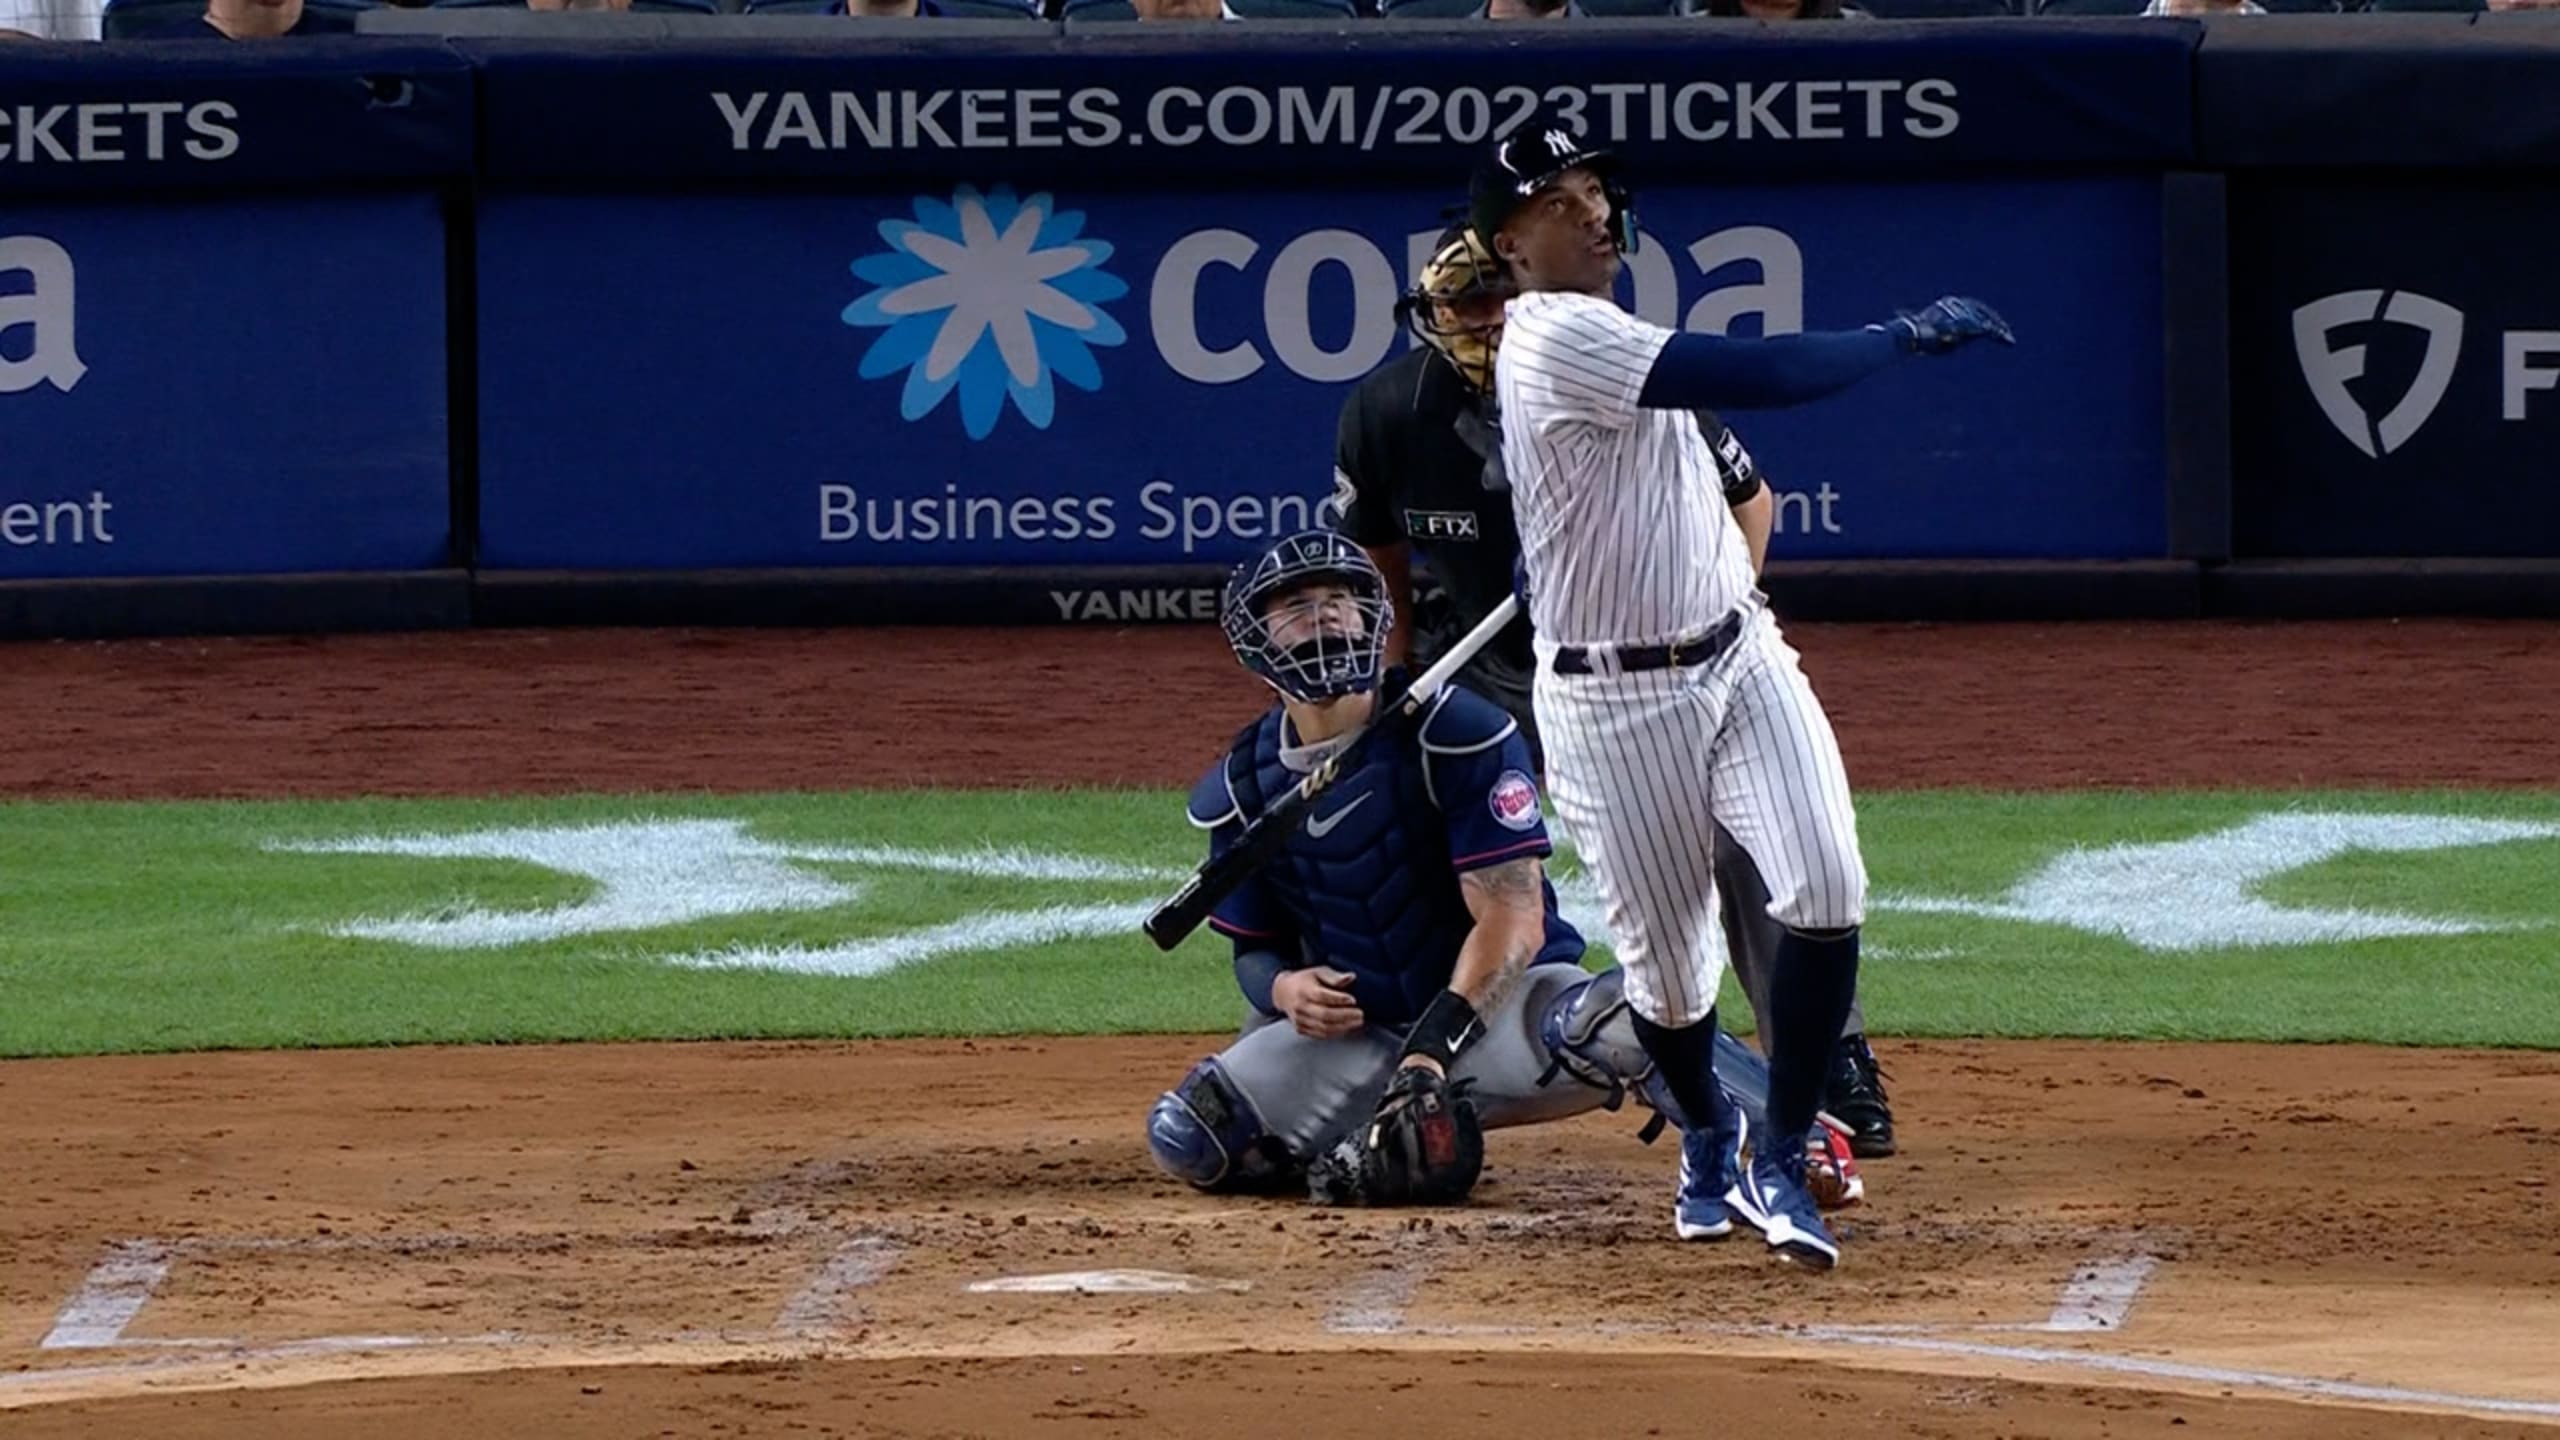 Carlos Correa crushes 462-foot home run at Yankee Stadium